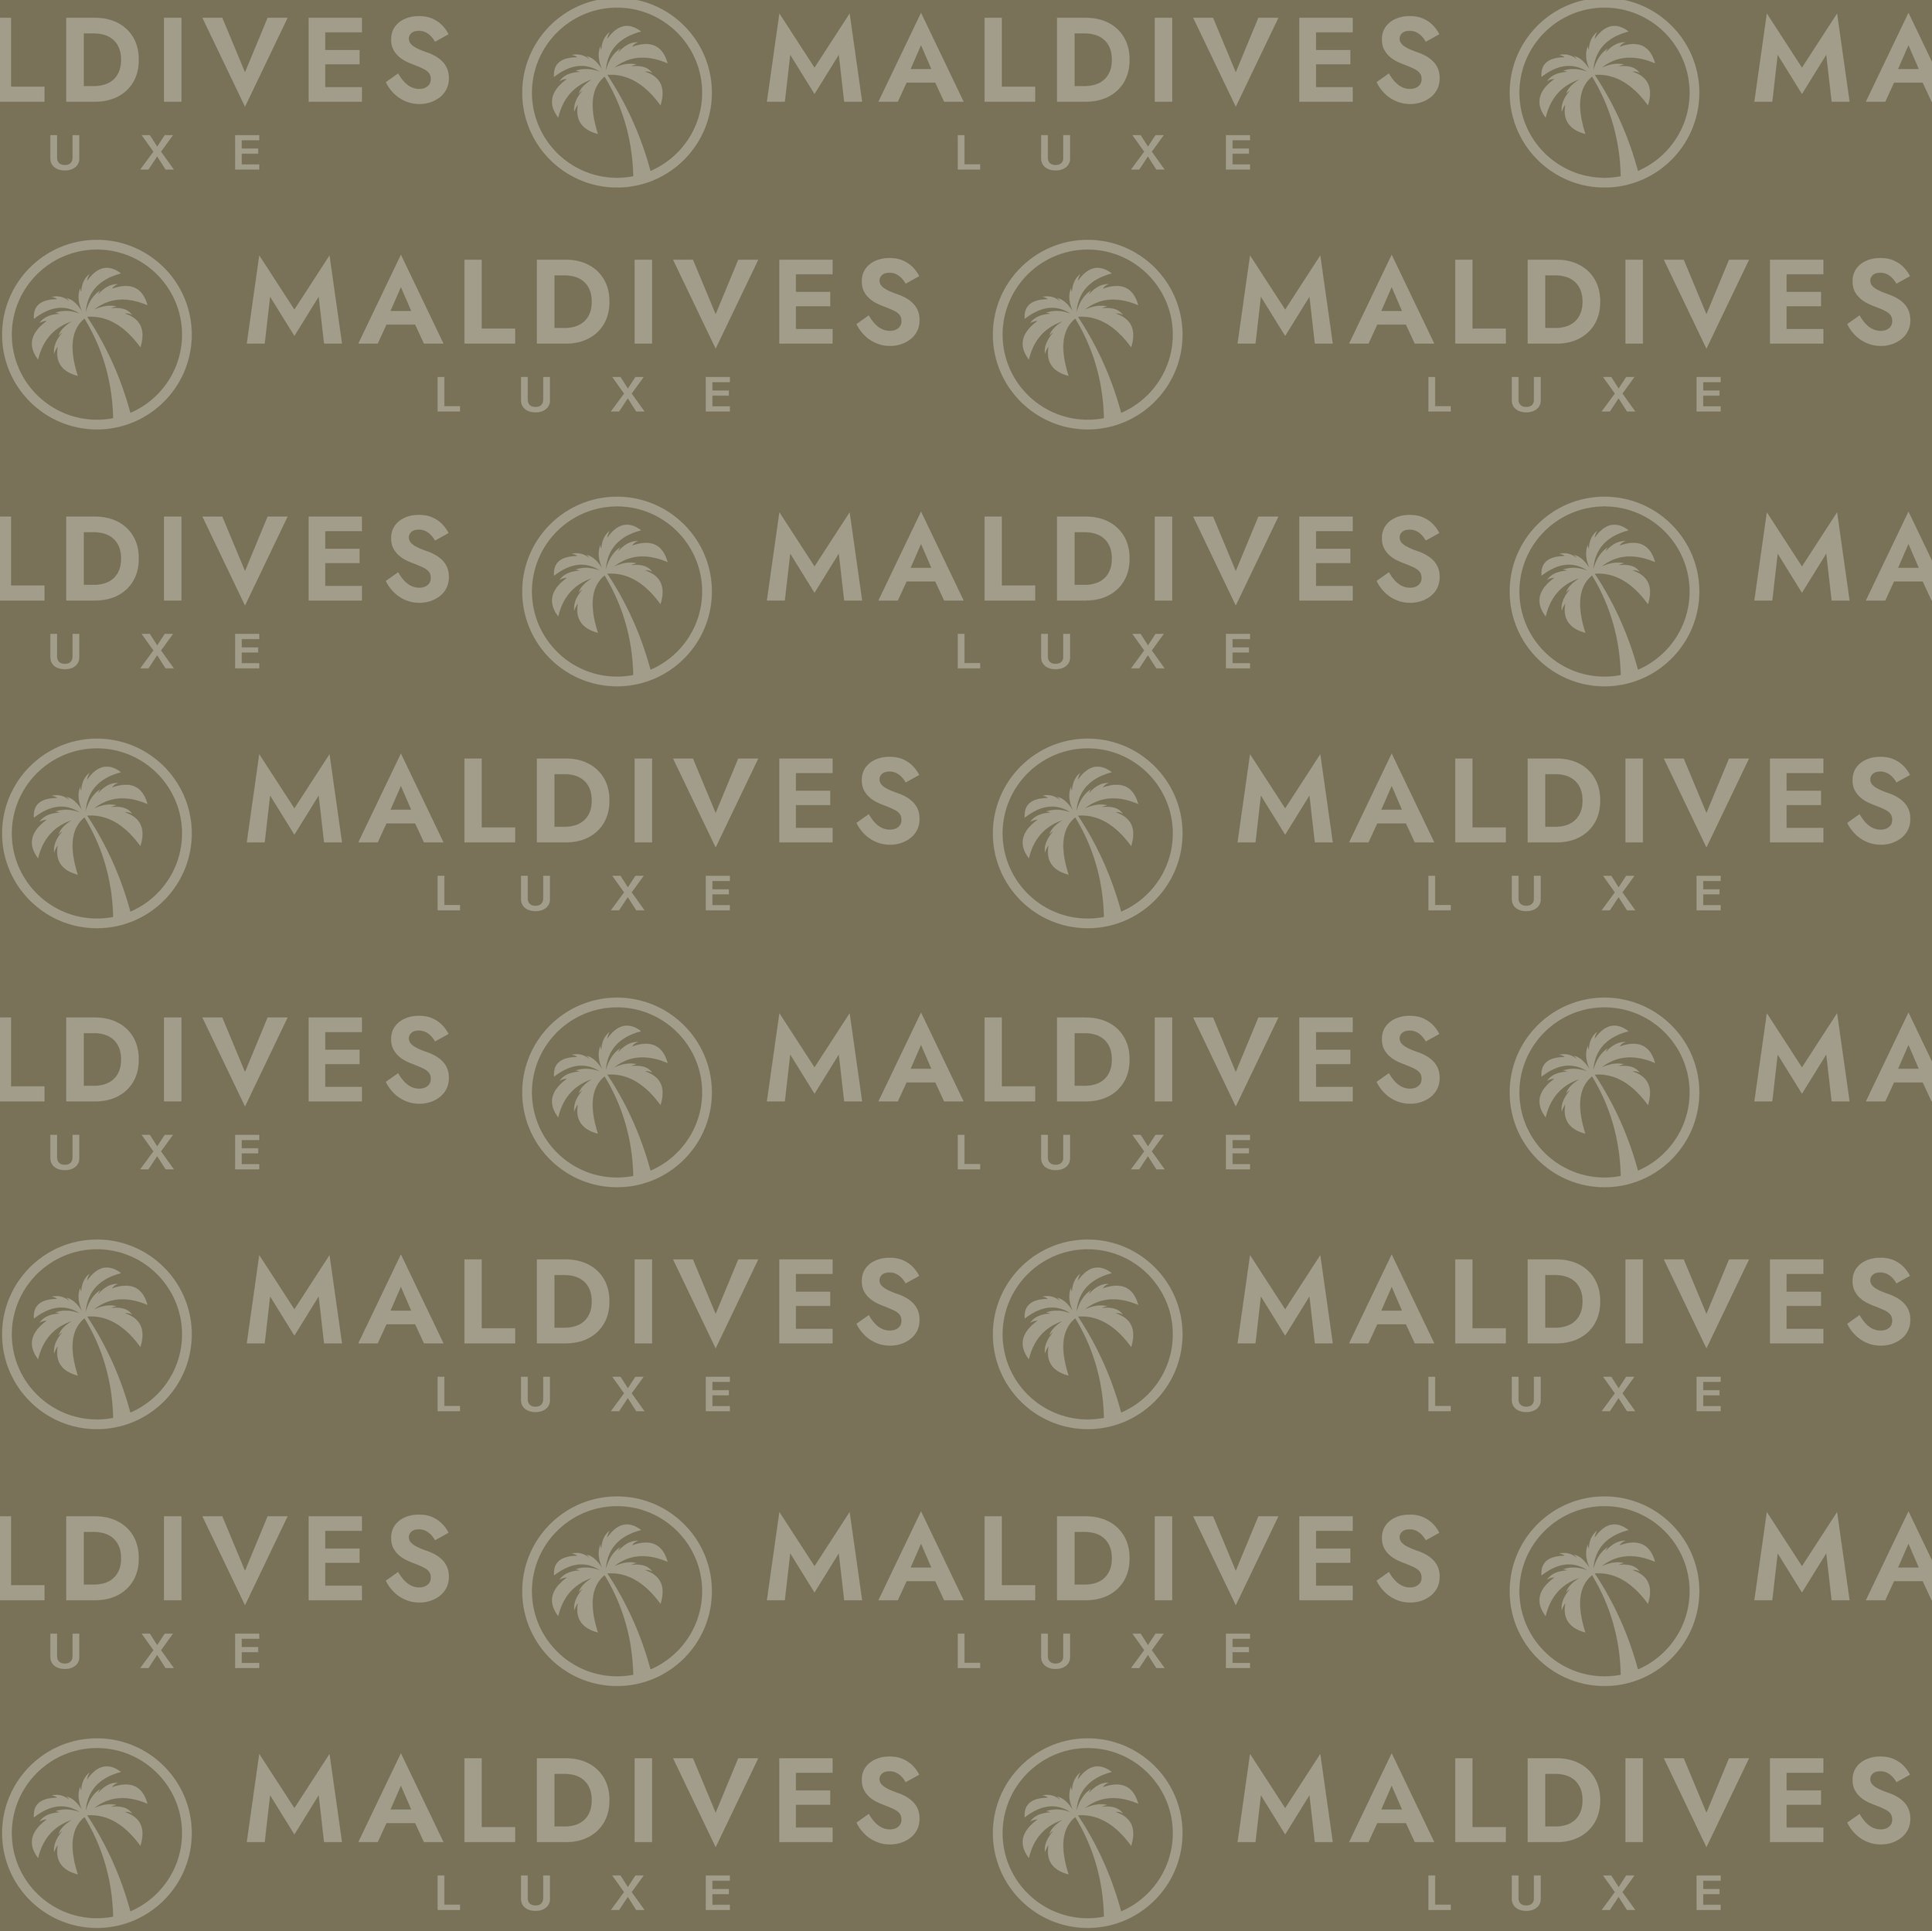 Maldives Luxe-03.jpg